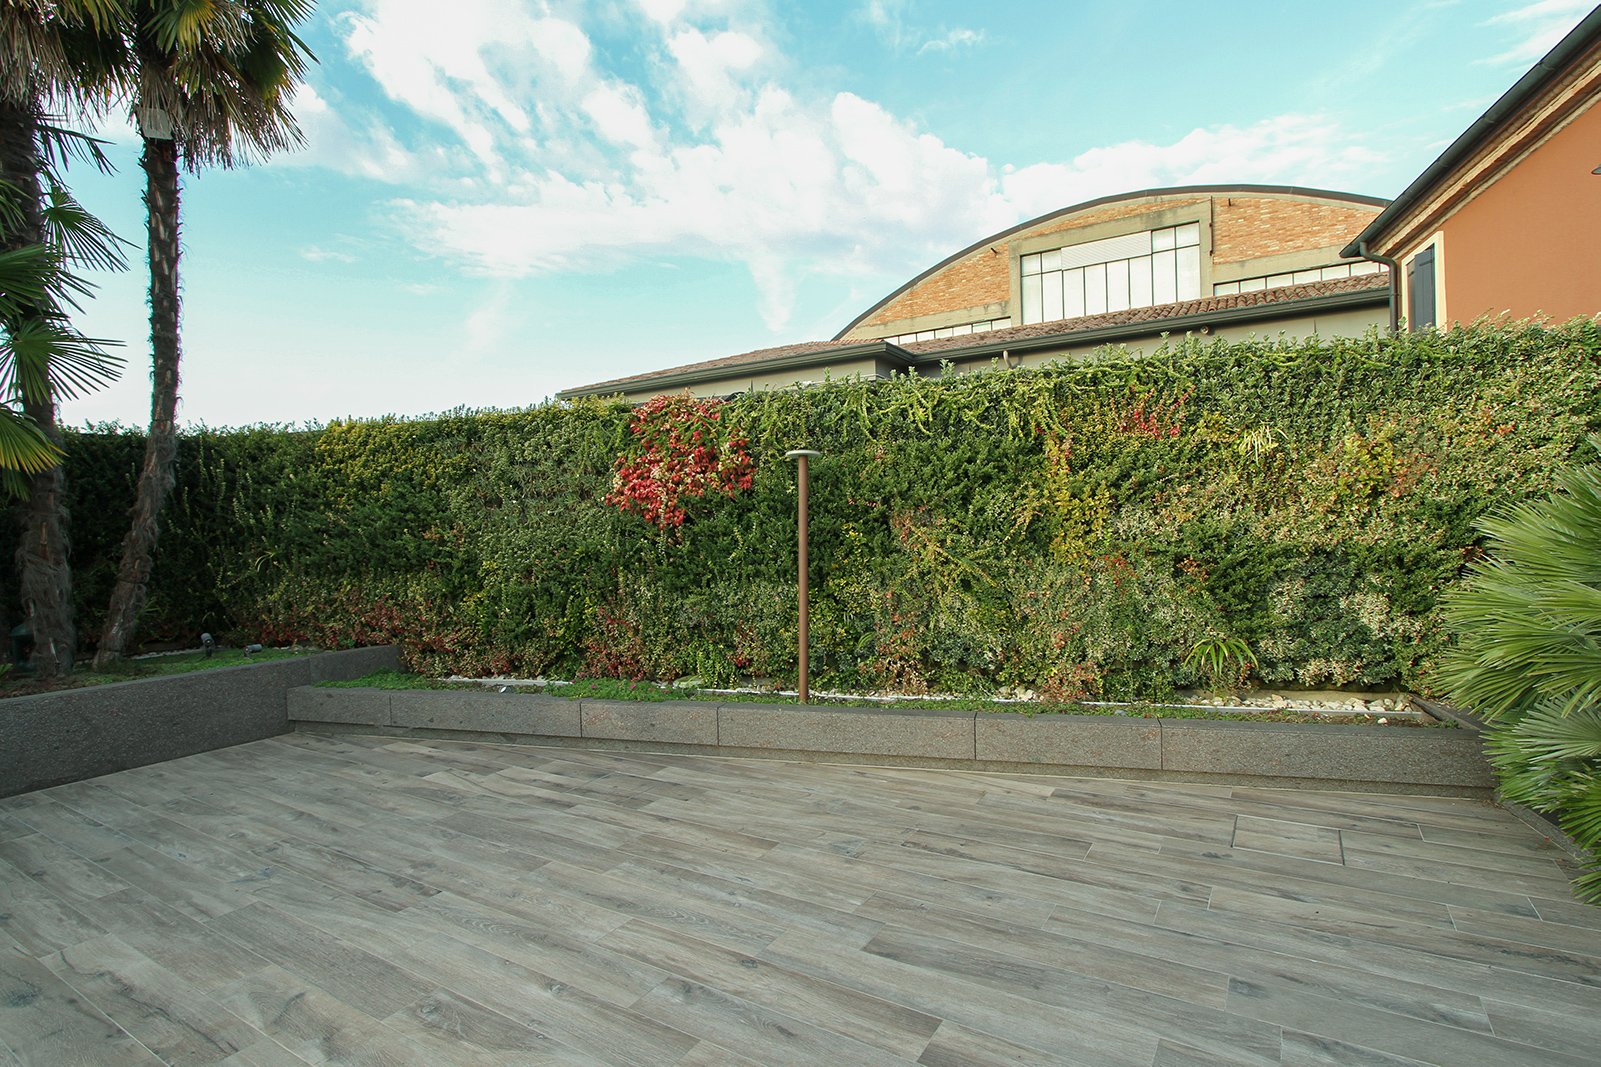 stable-garden-vertical-wall-green-sundar-italia-013.jpg